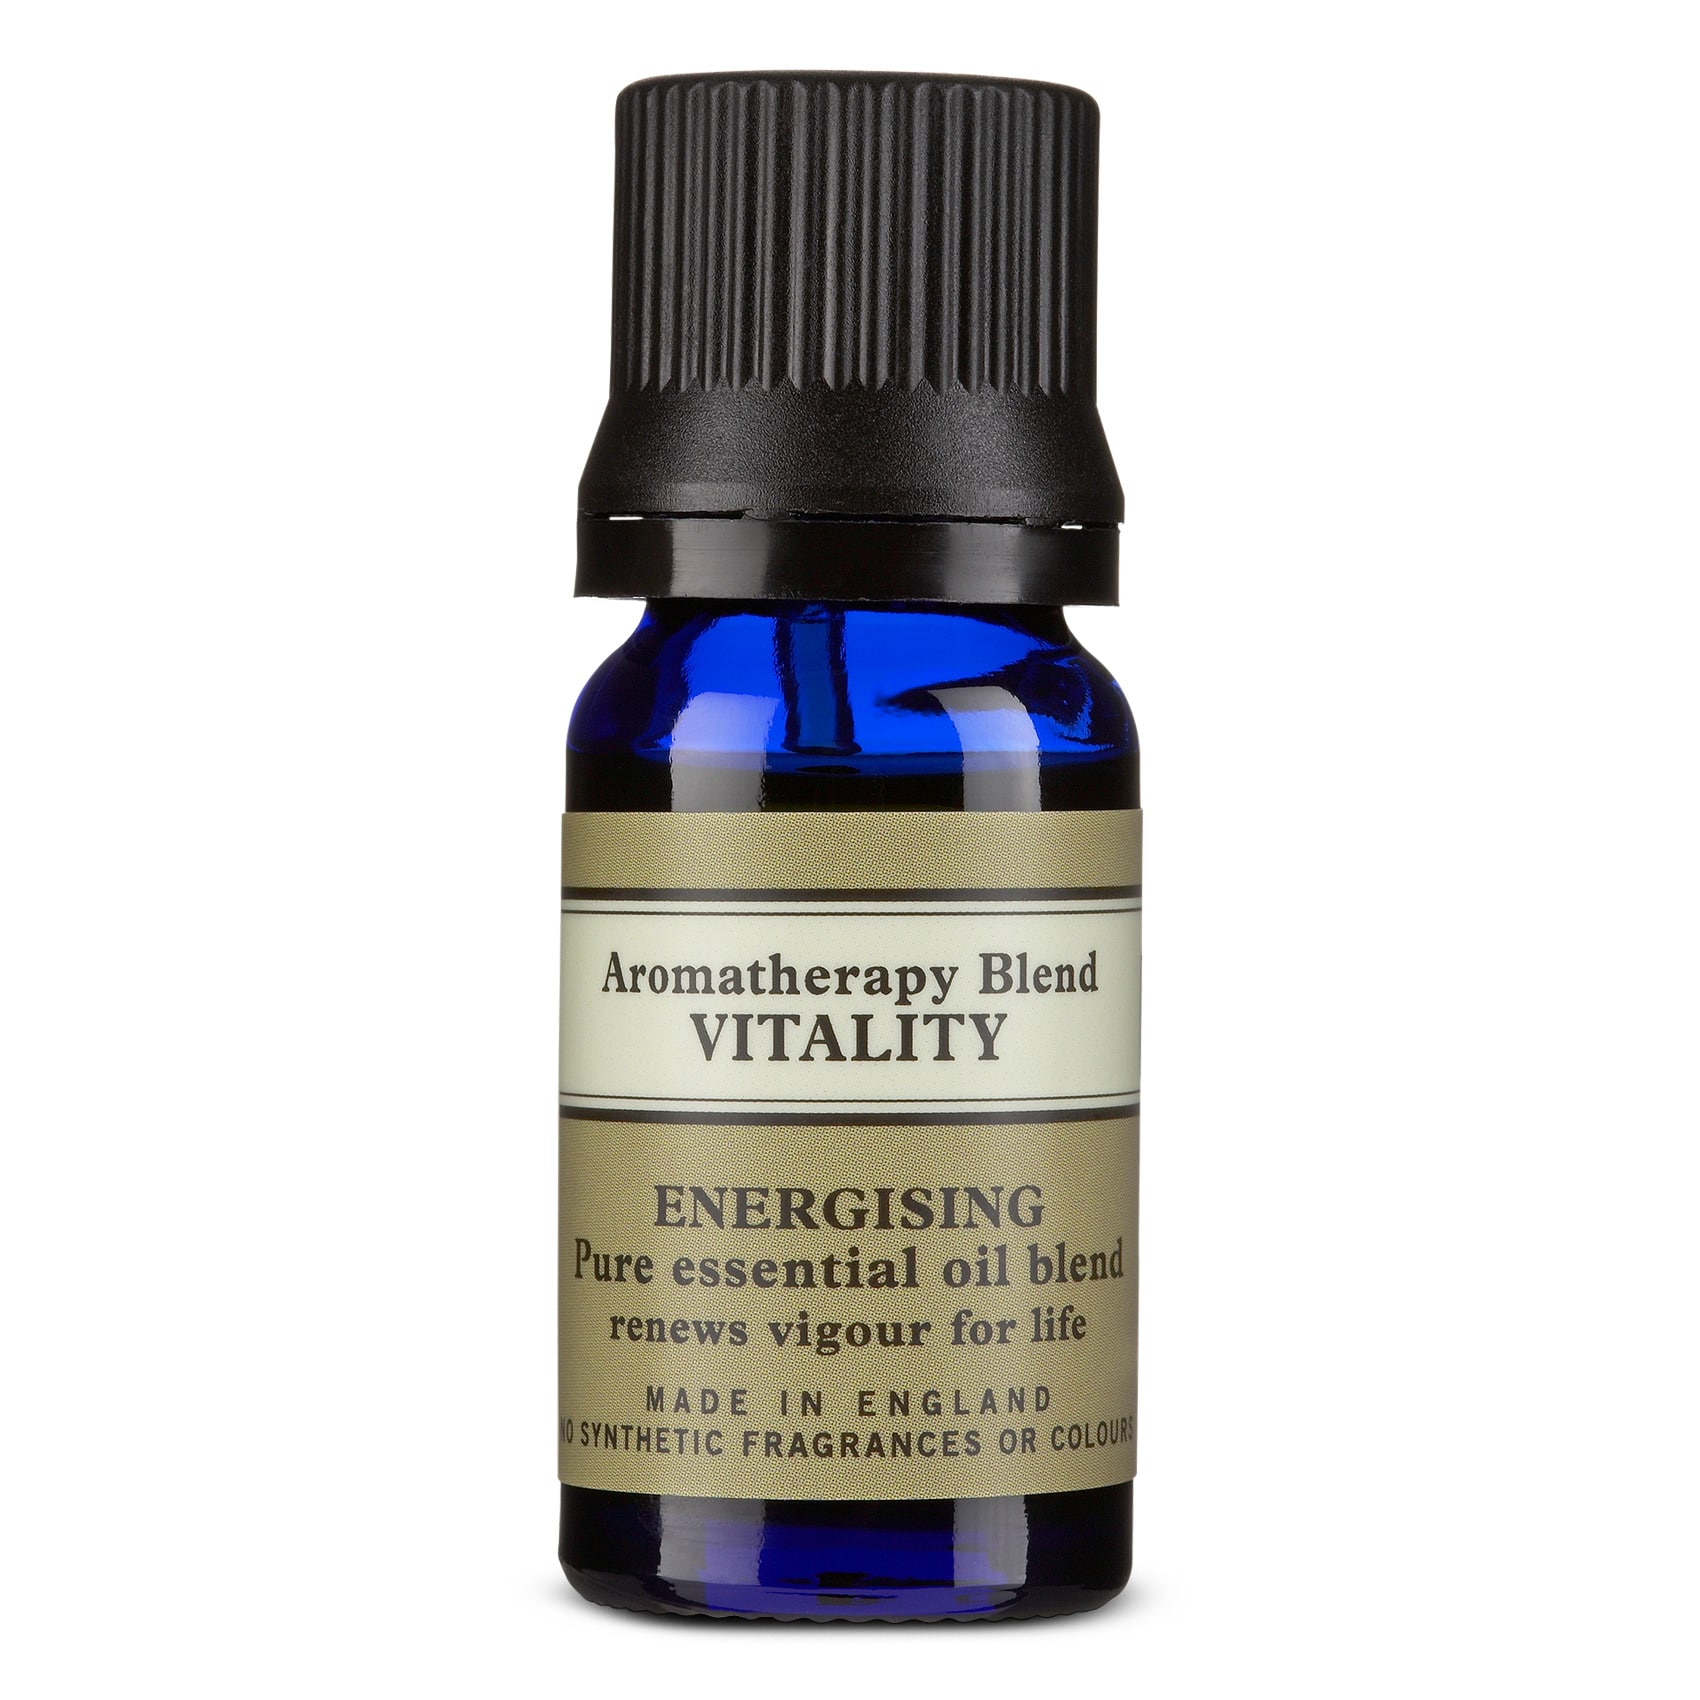 Neal's Yard Remedies Aromatherapy Blend Vitality 10ml